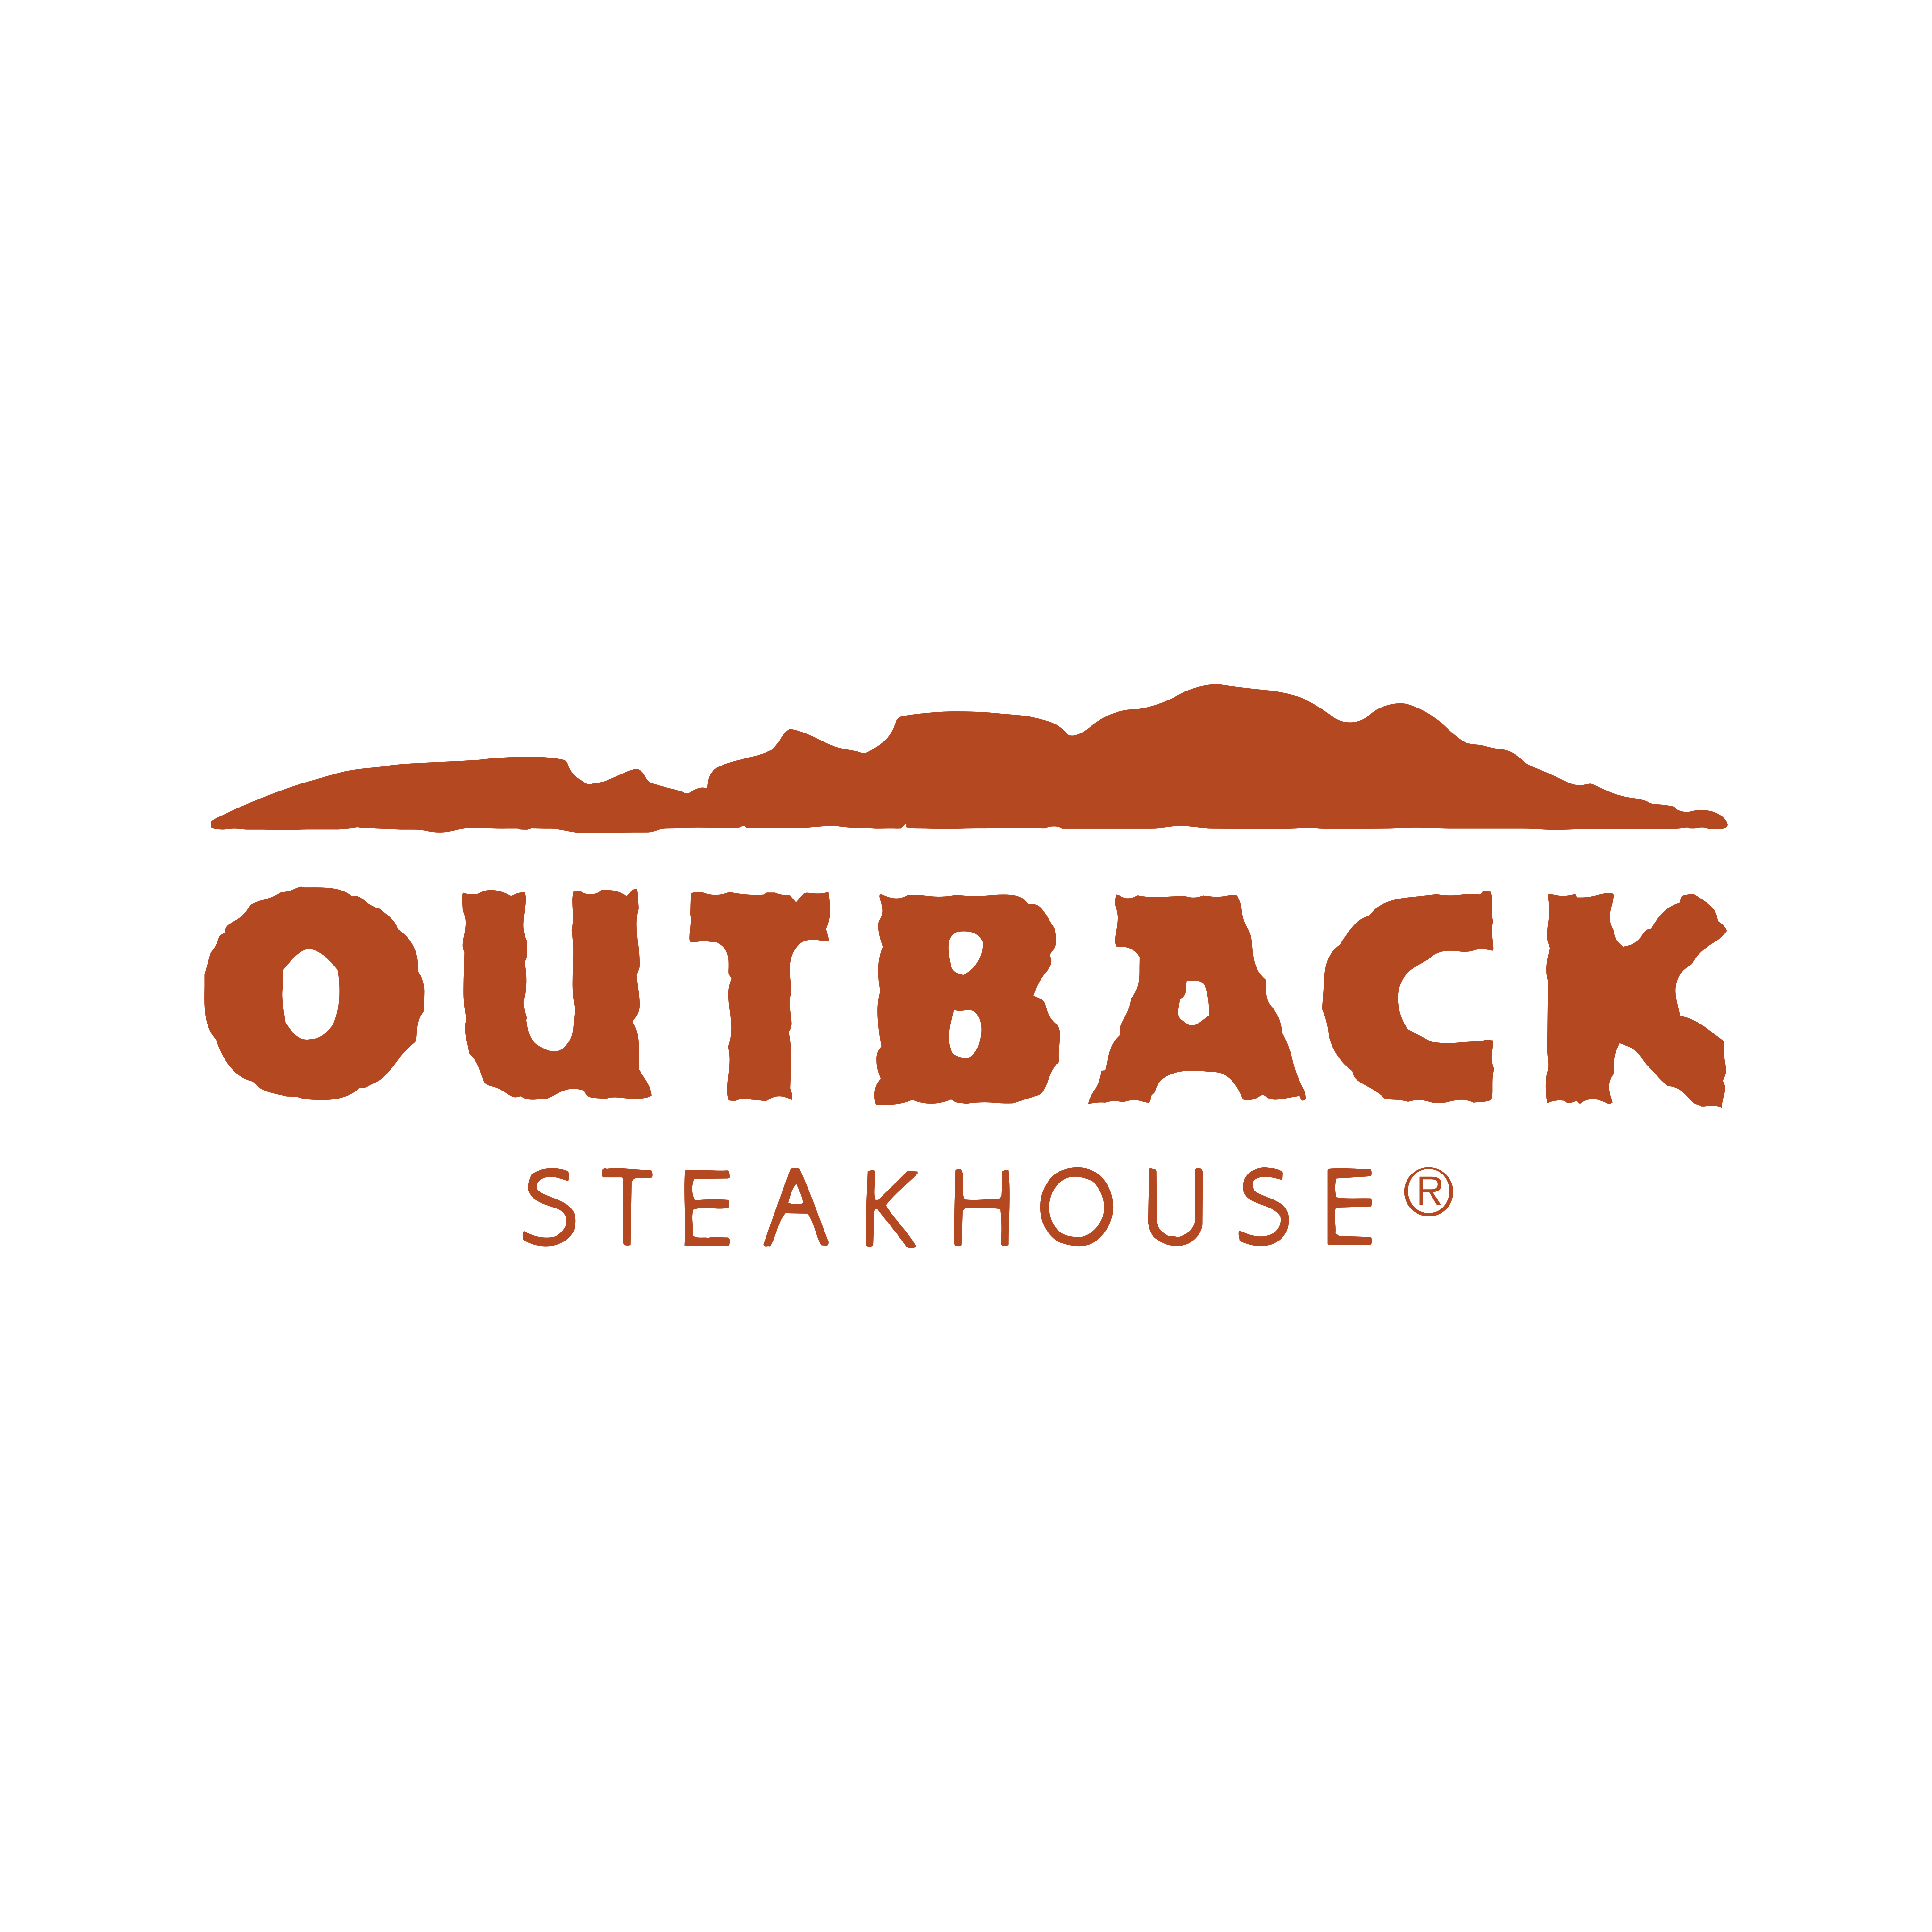 outback logo 0 - Outback Steakhouse Logo